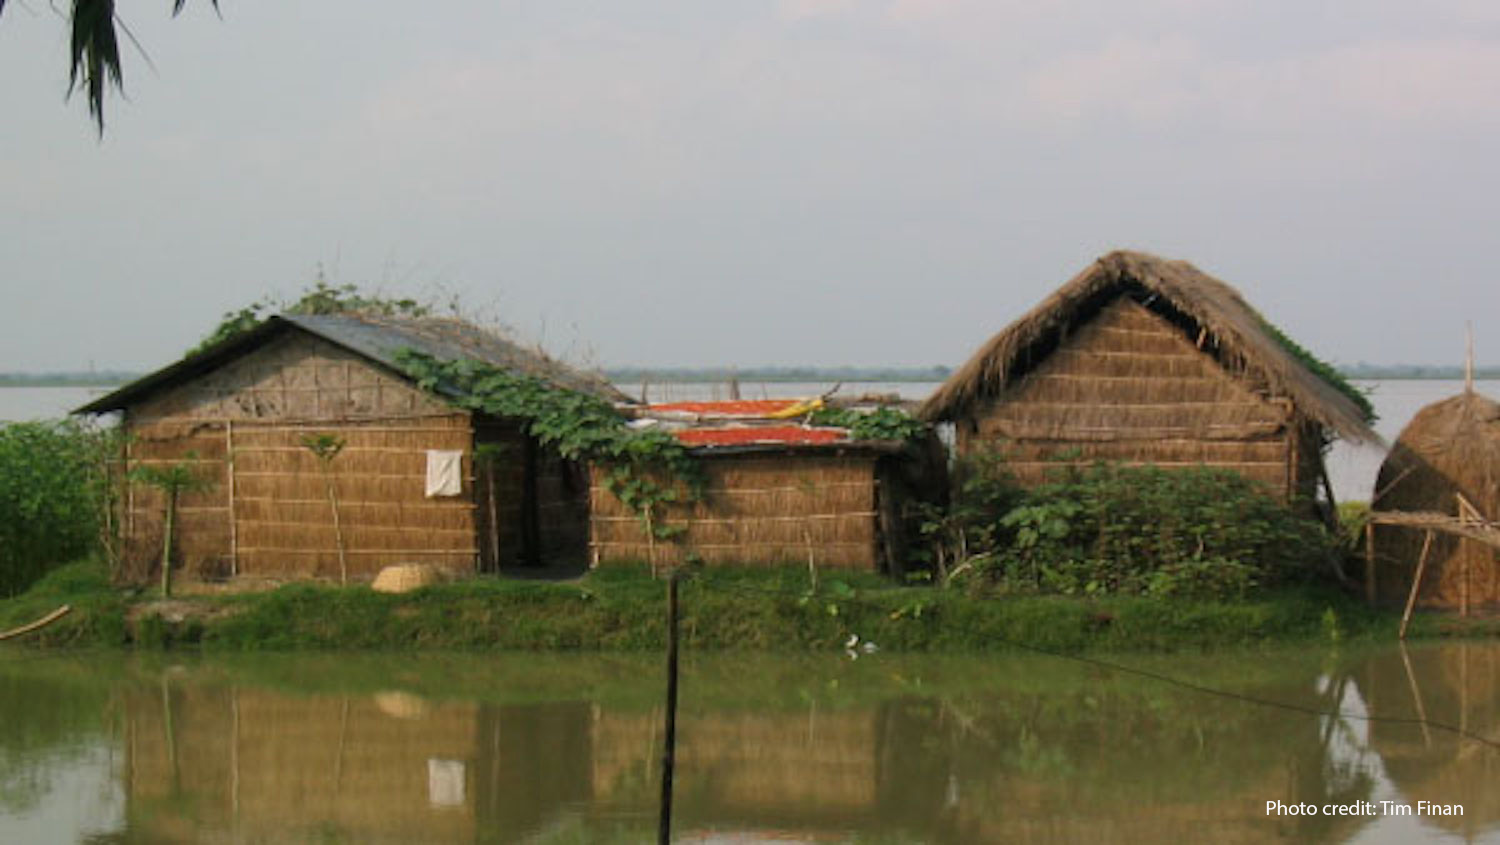 Responding to floods in Bangladesh